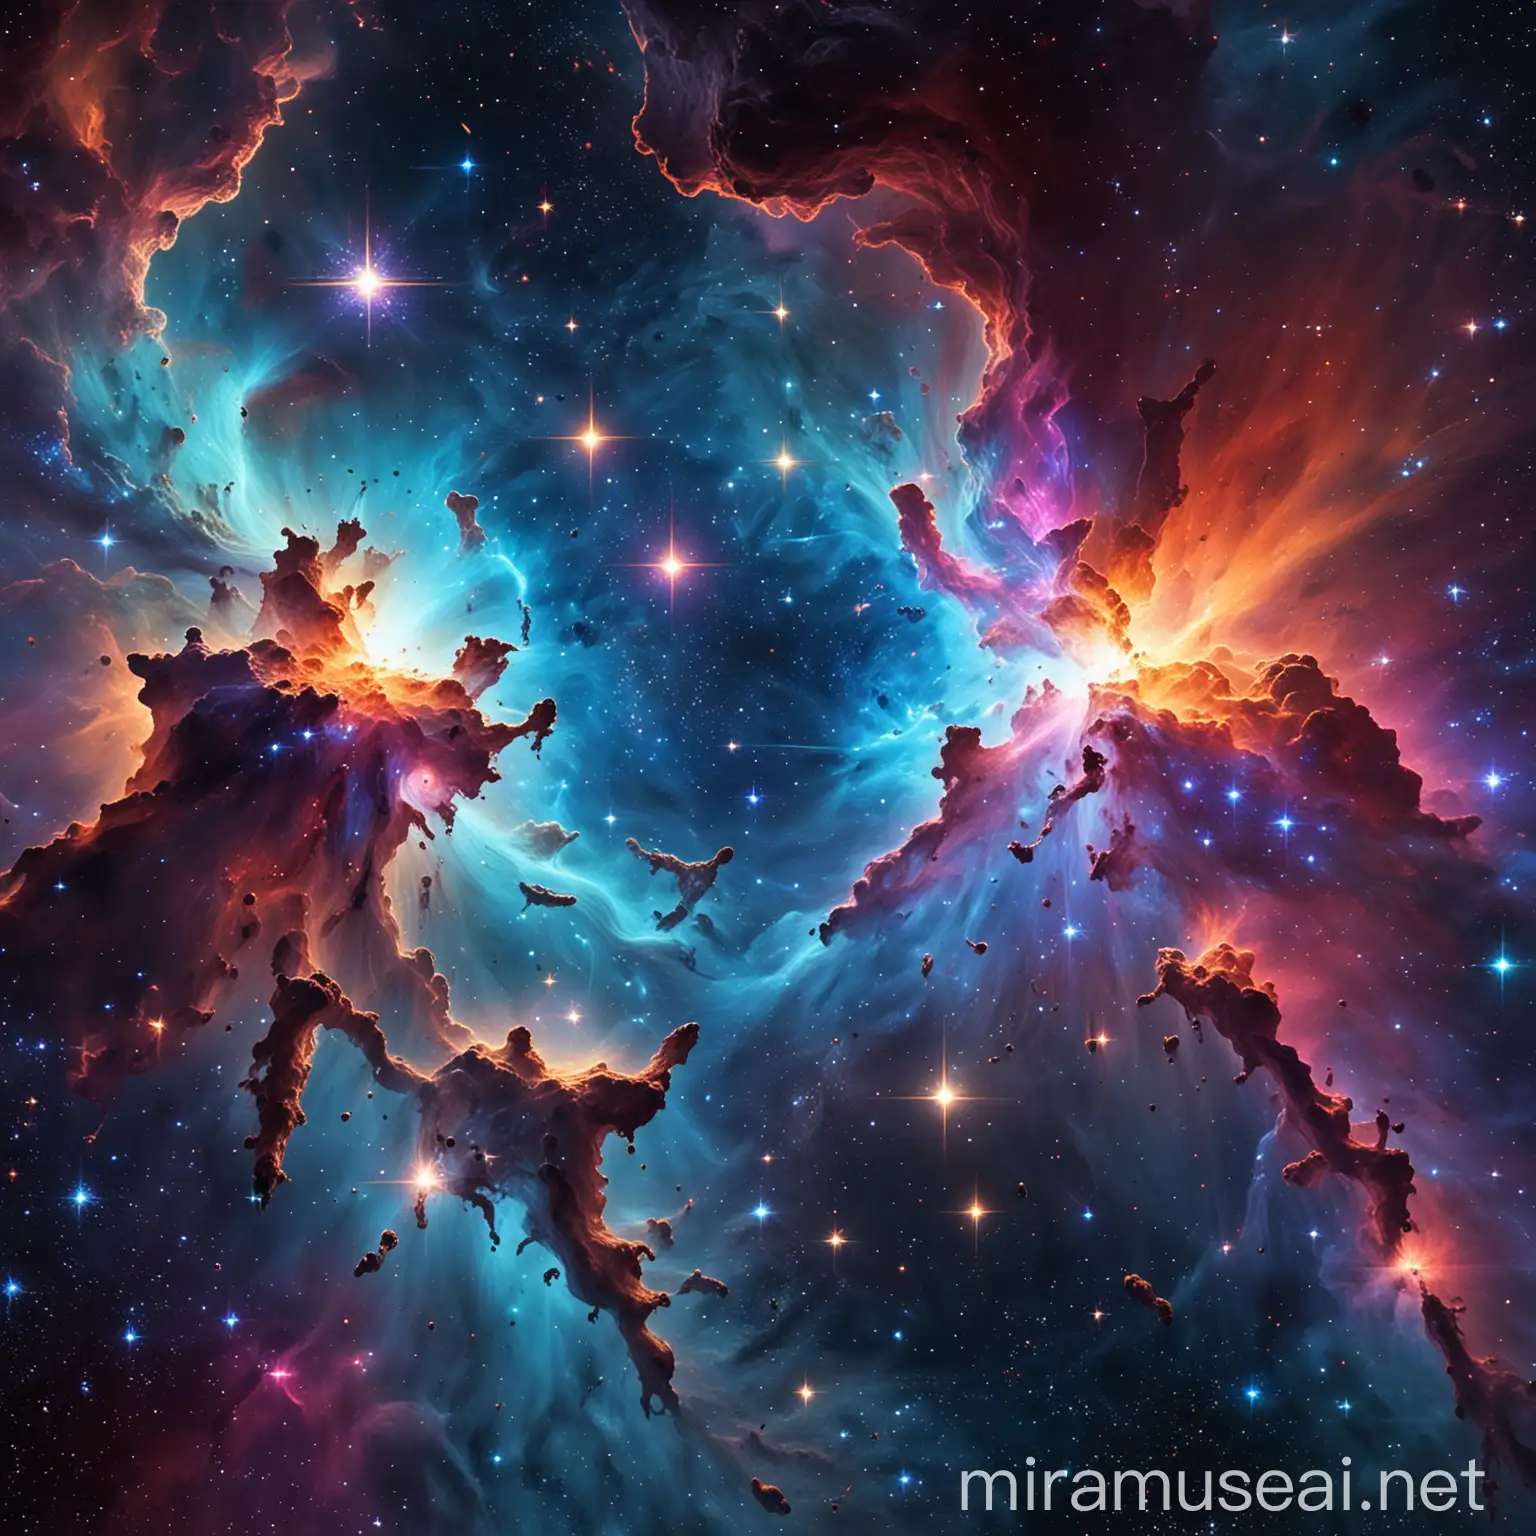 Breathtaking 8K NASA SciFi Wallpaper Stunning Stars and Colorful Nebulas